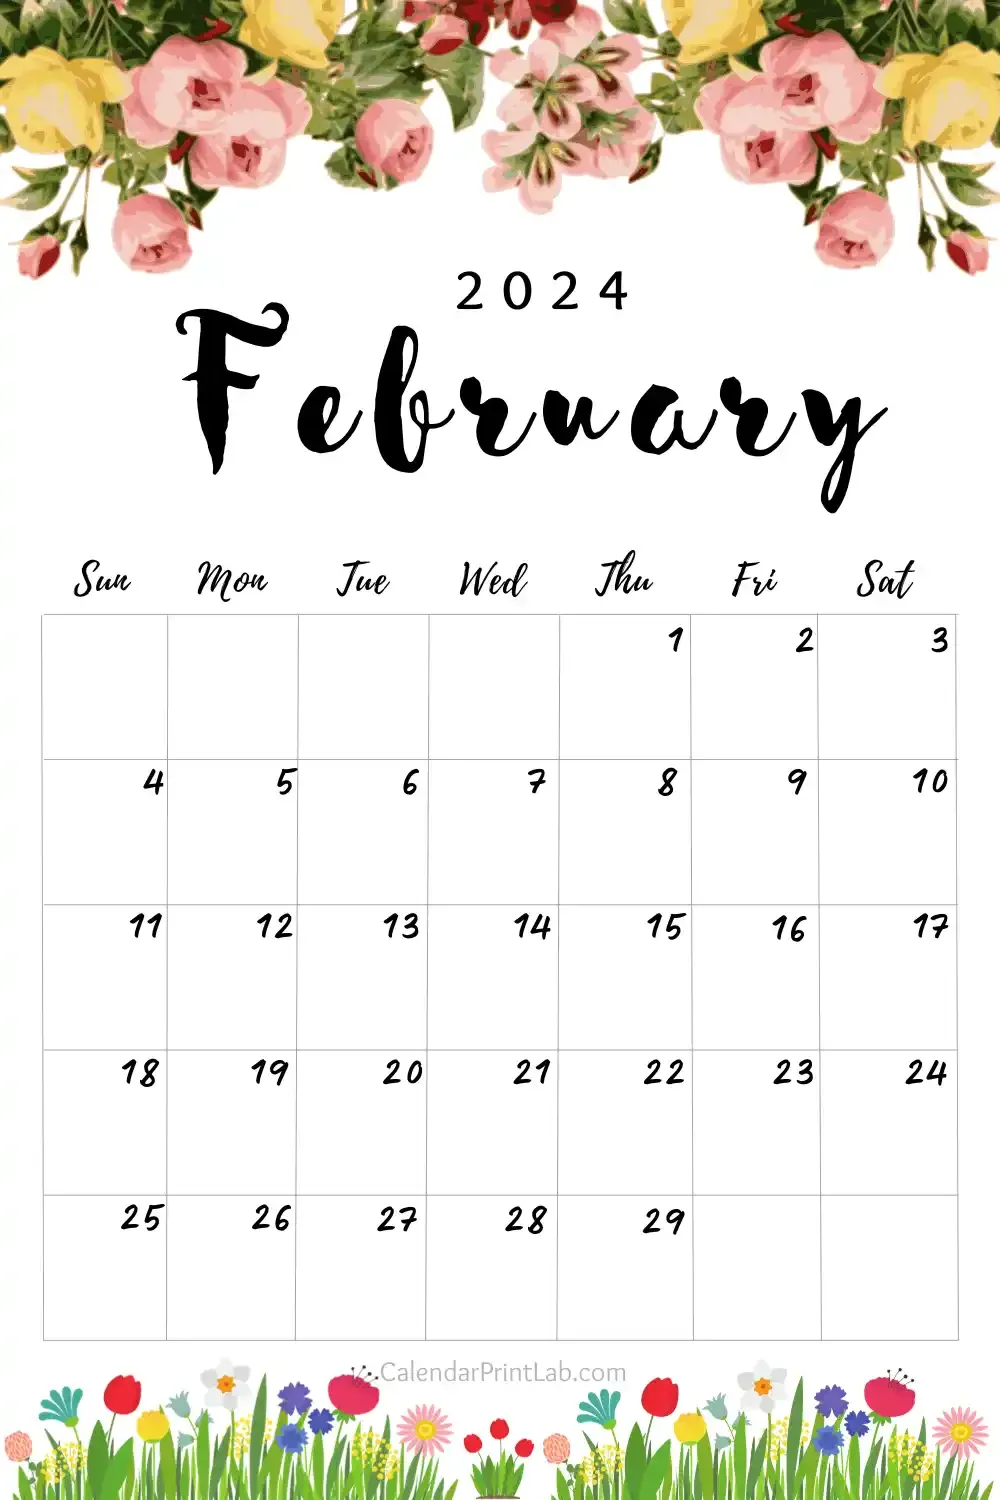 Download February 2024 Floral Calendar